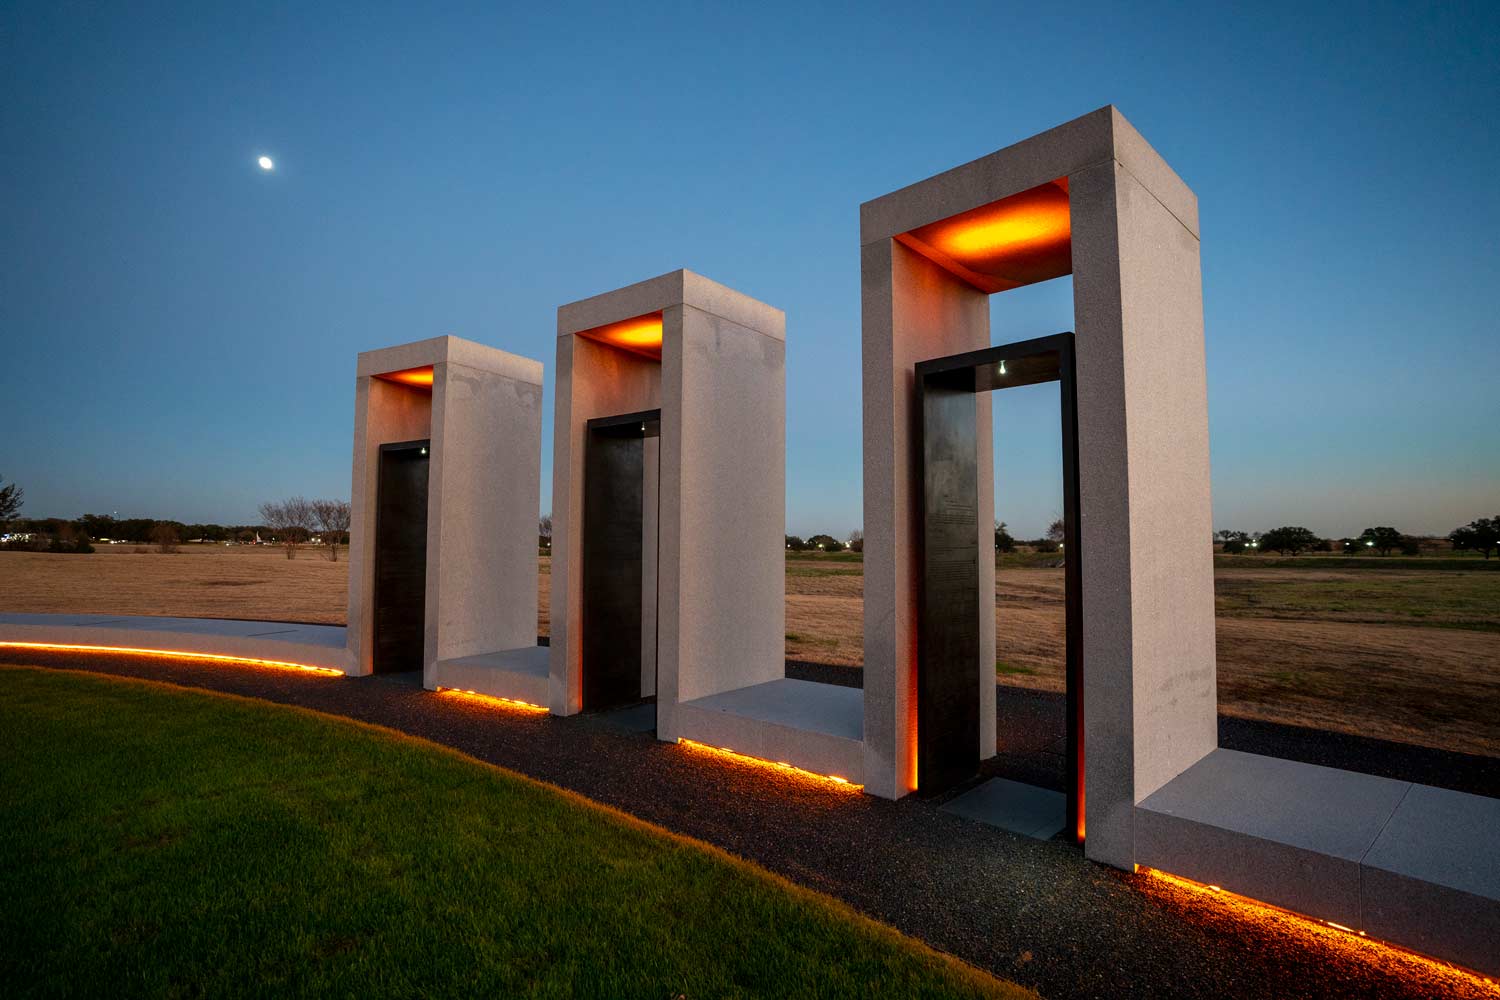 Three of the bonfire memorial pillars lit up at sunset